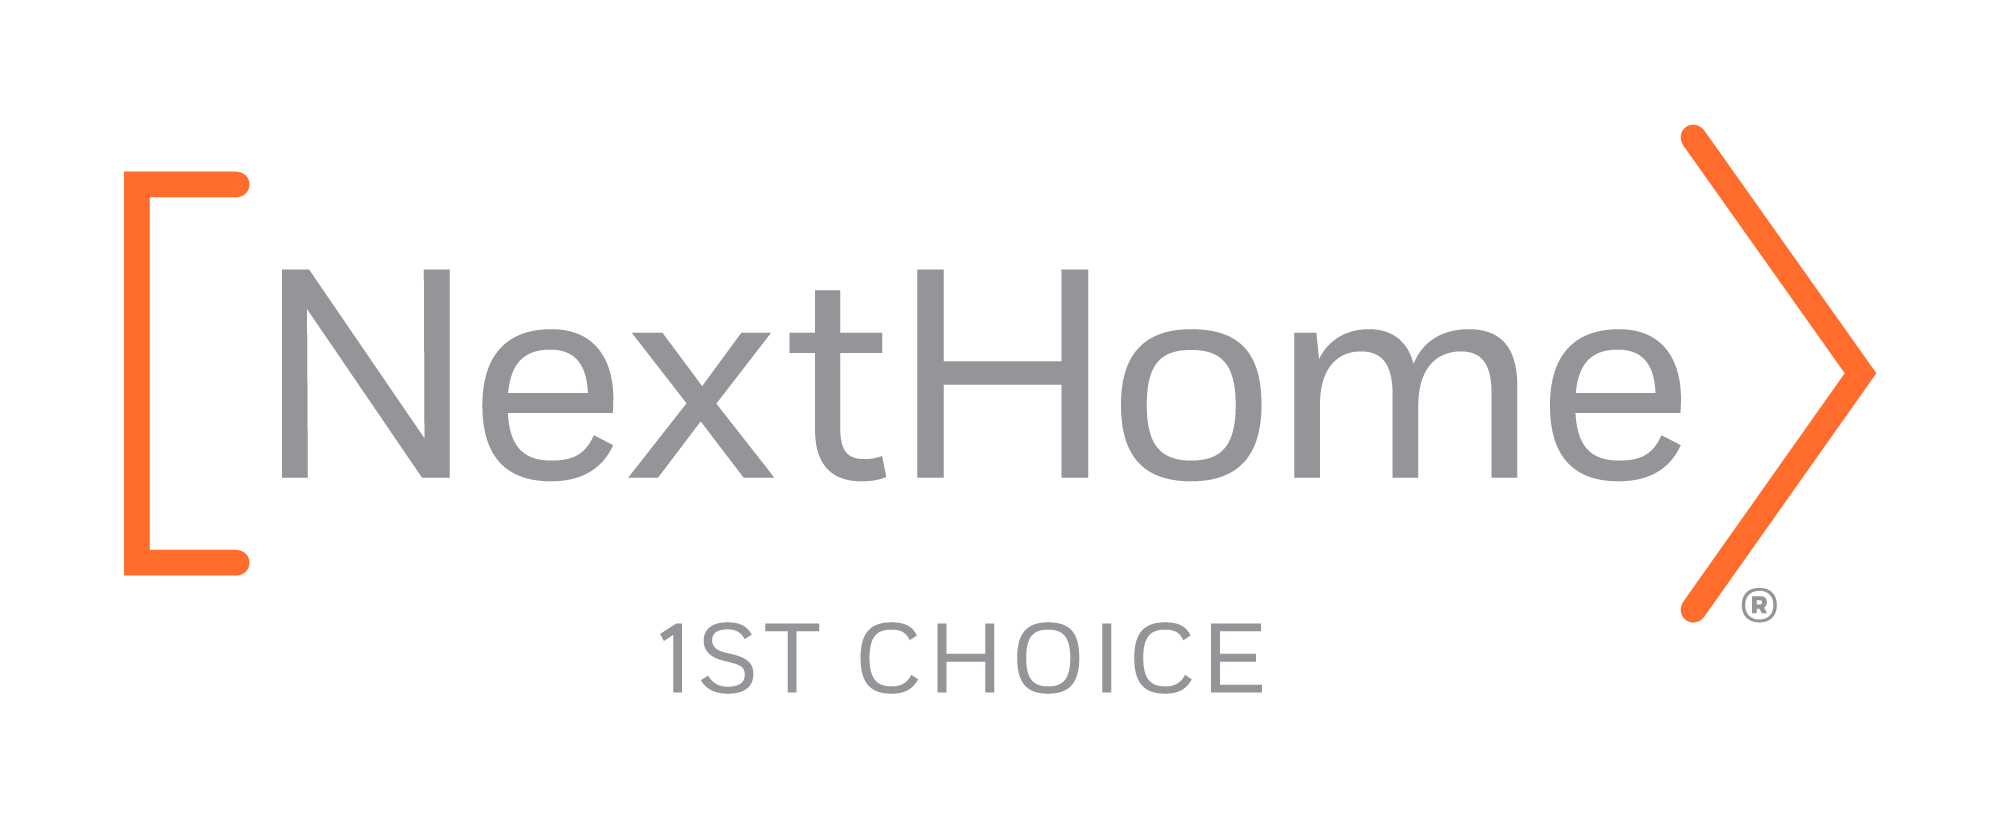 NextHome 1st Choice